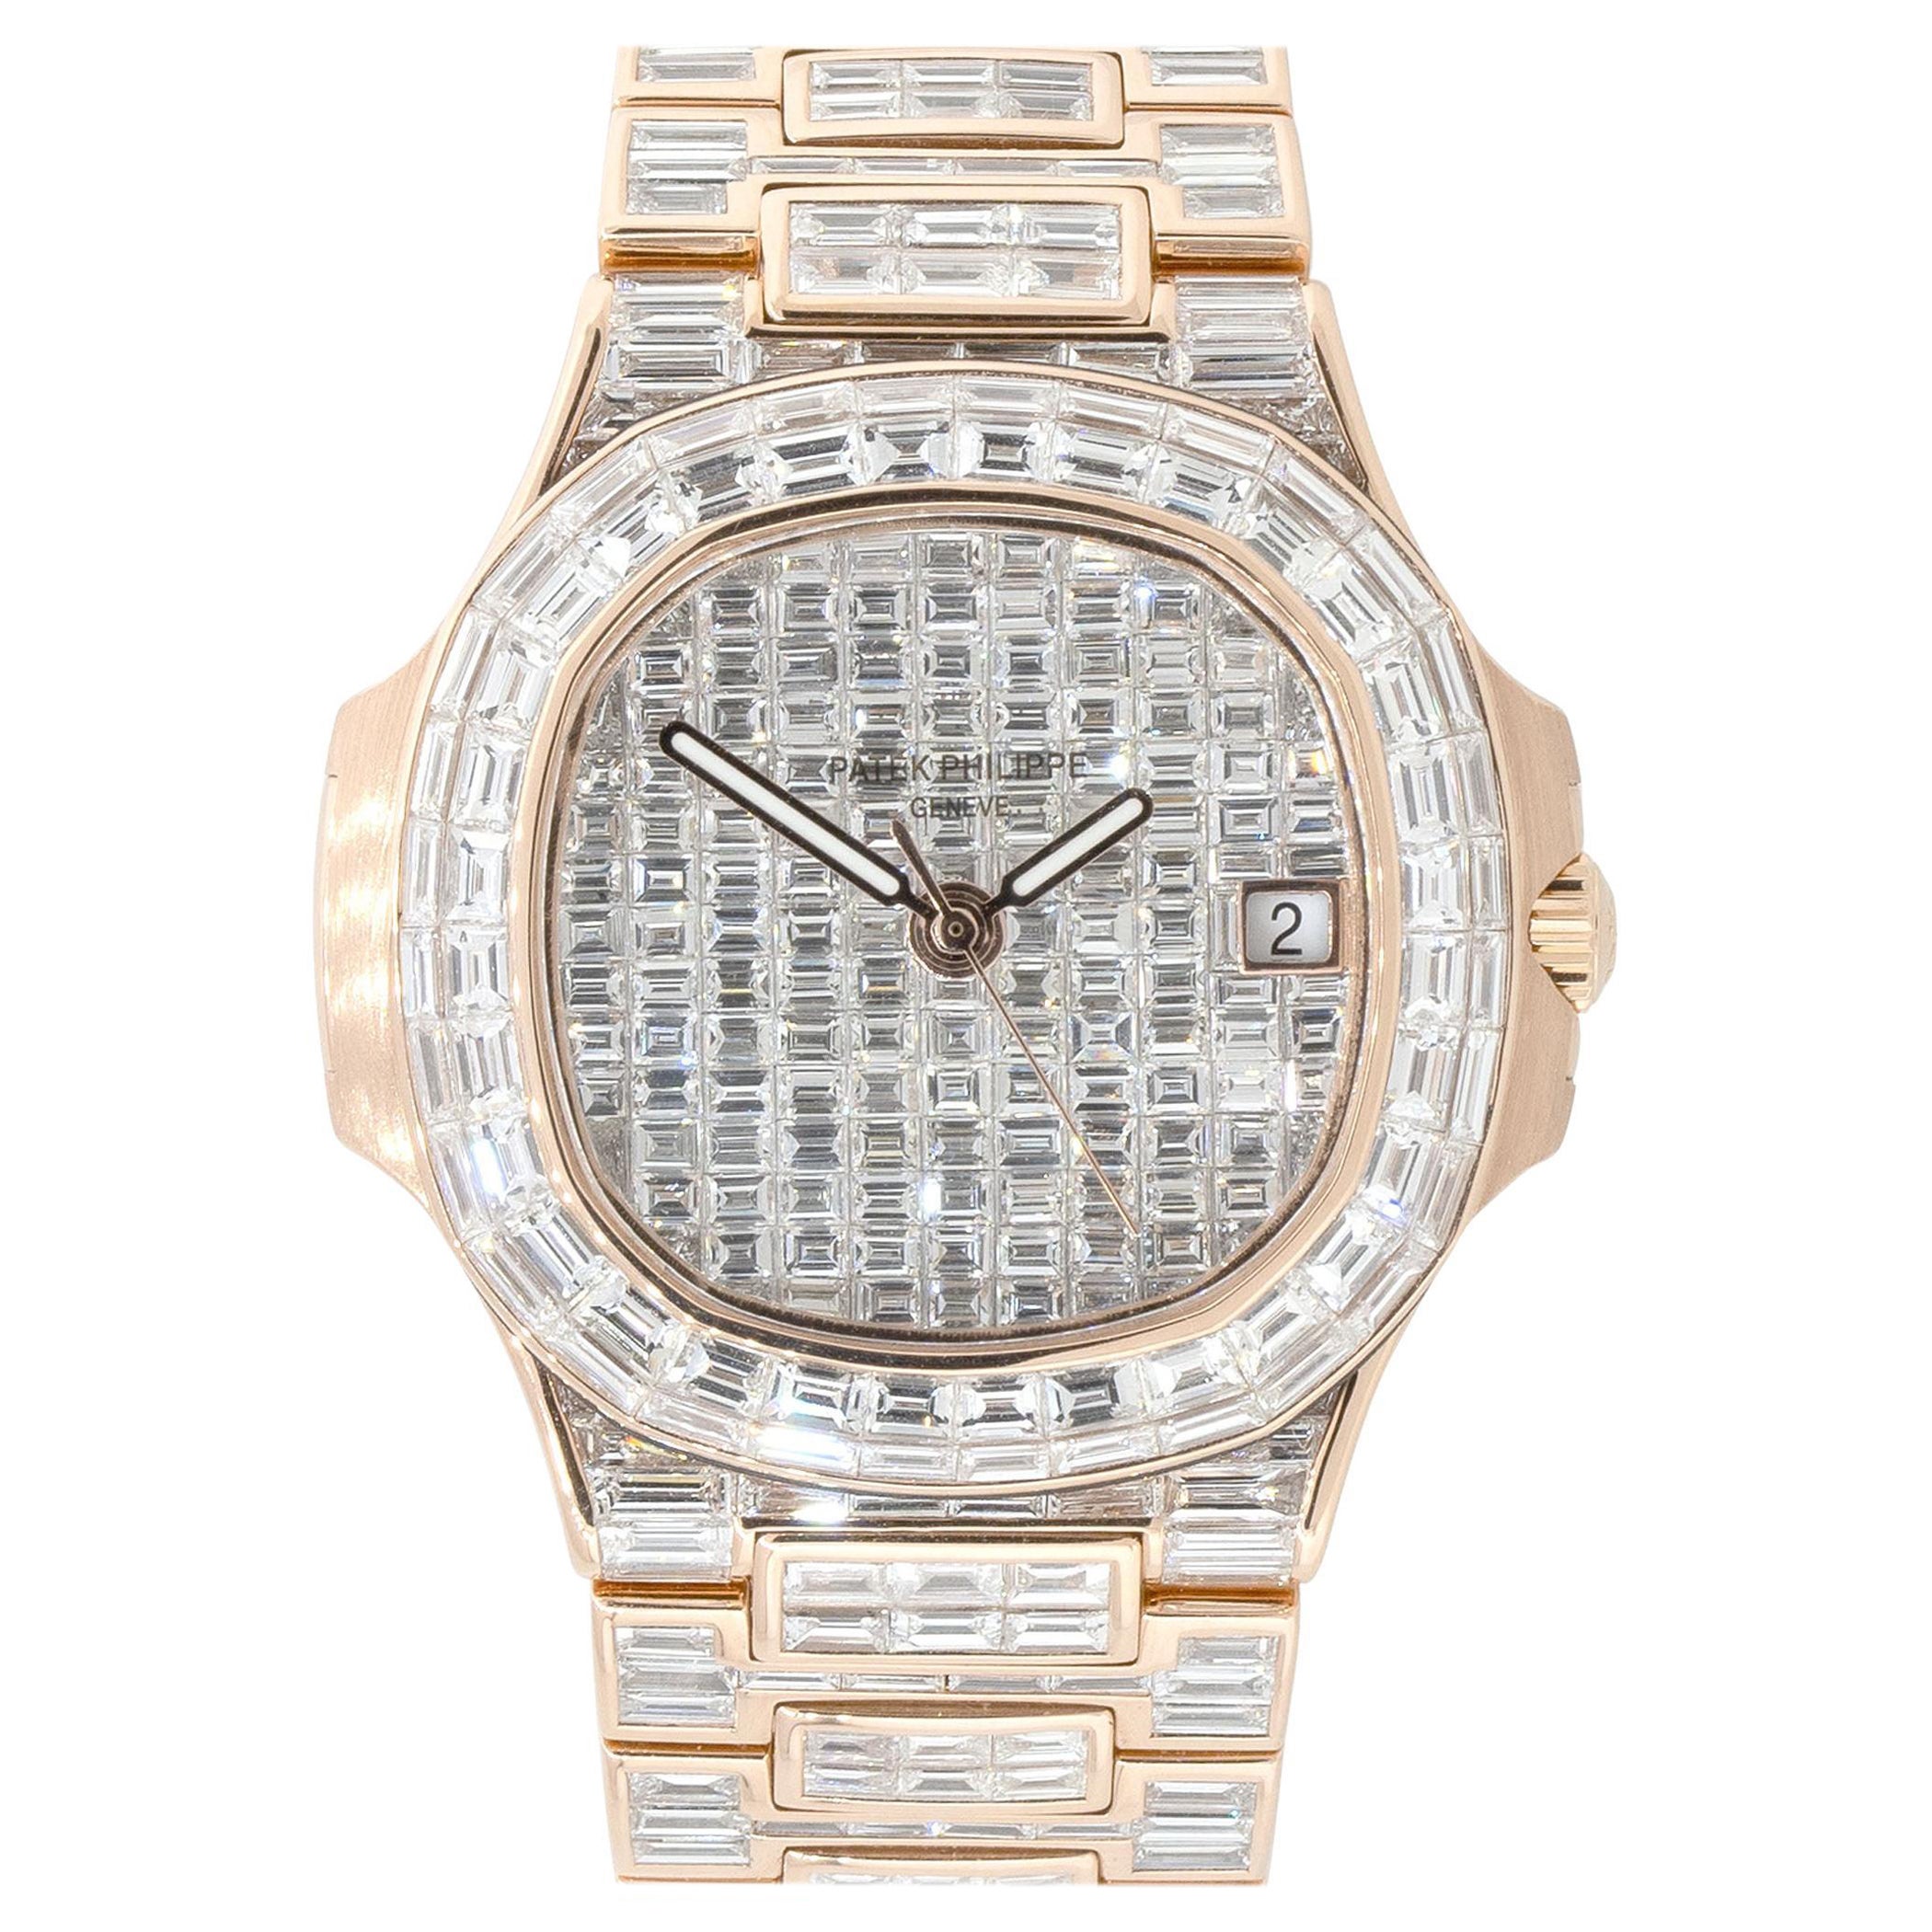 Patek Philippe Nautilus 18k Rose Gold All Baguette Diamond Watch In Stock